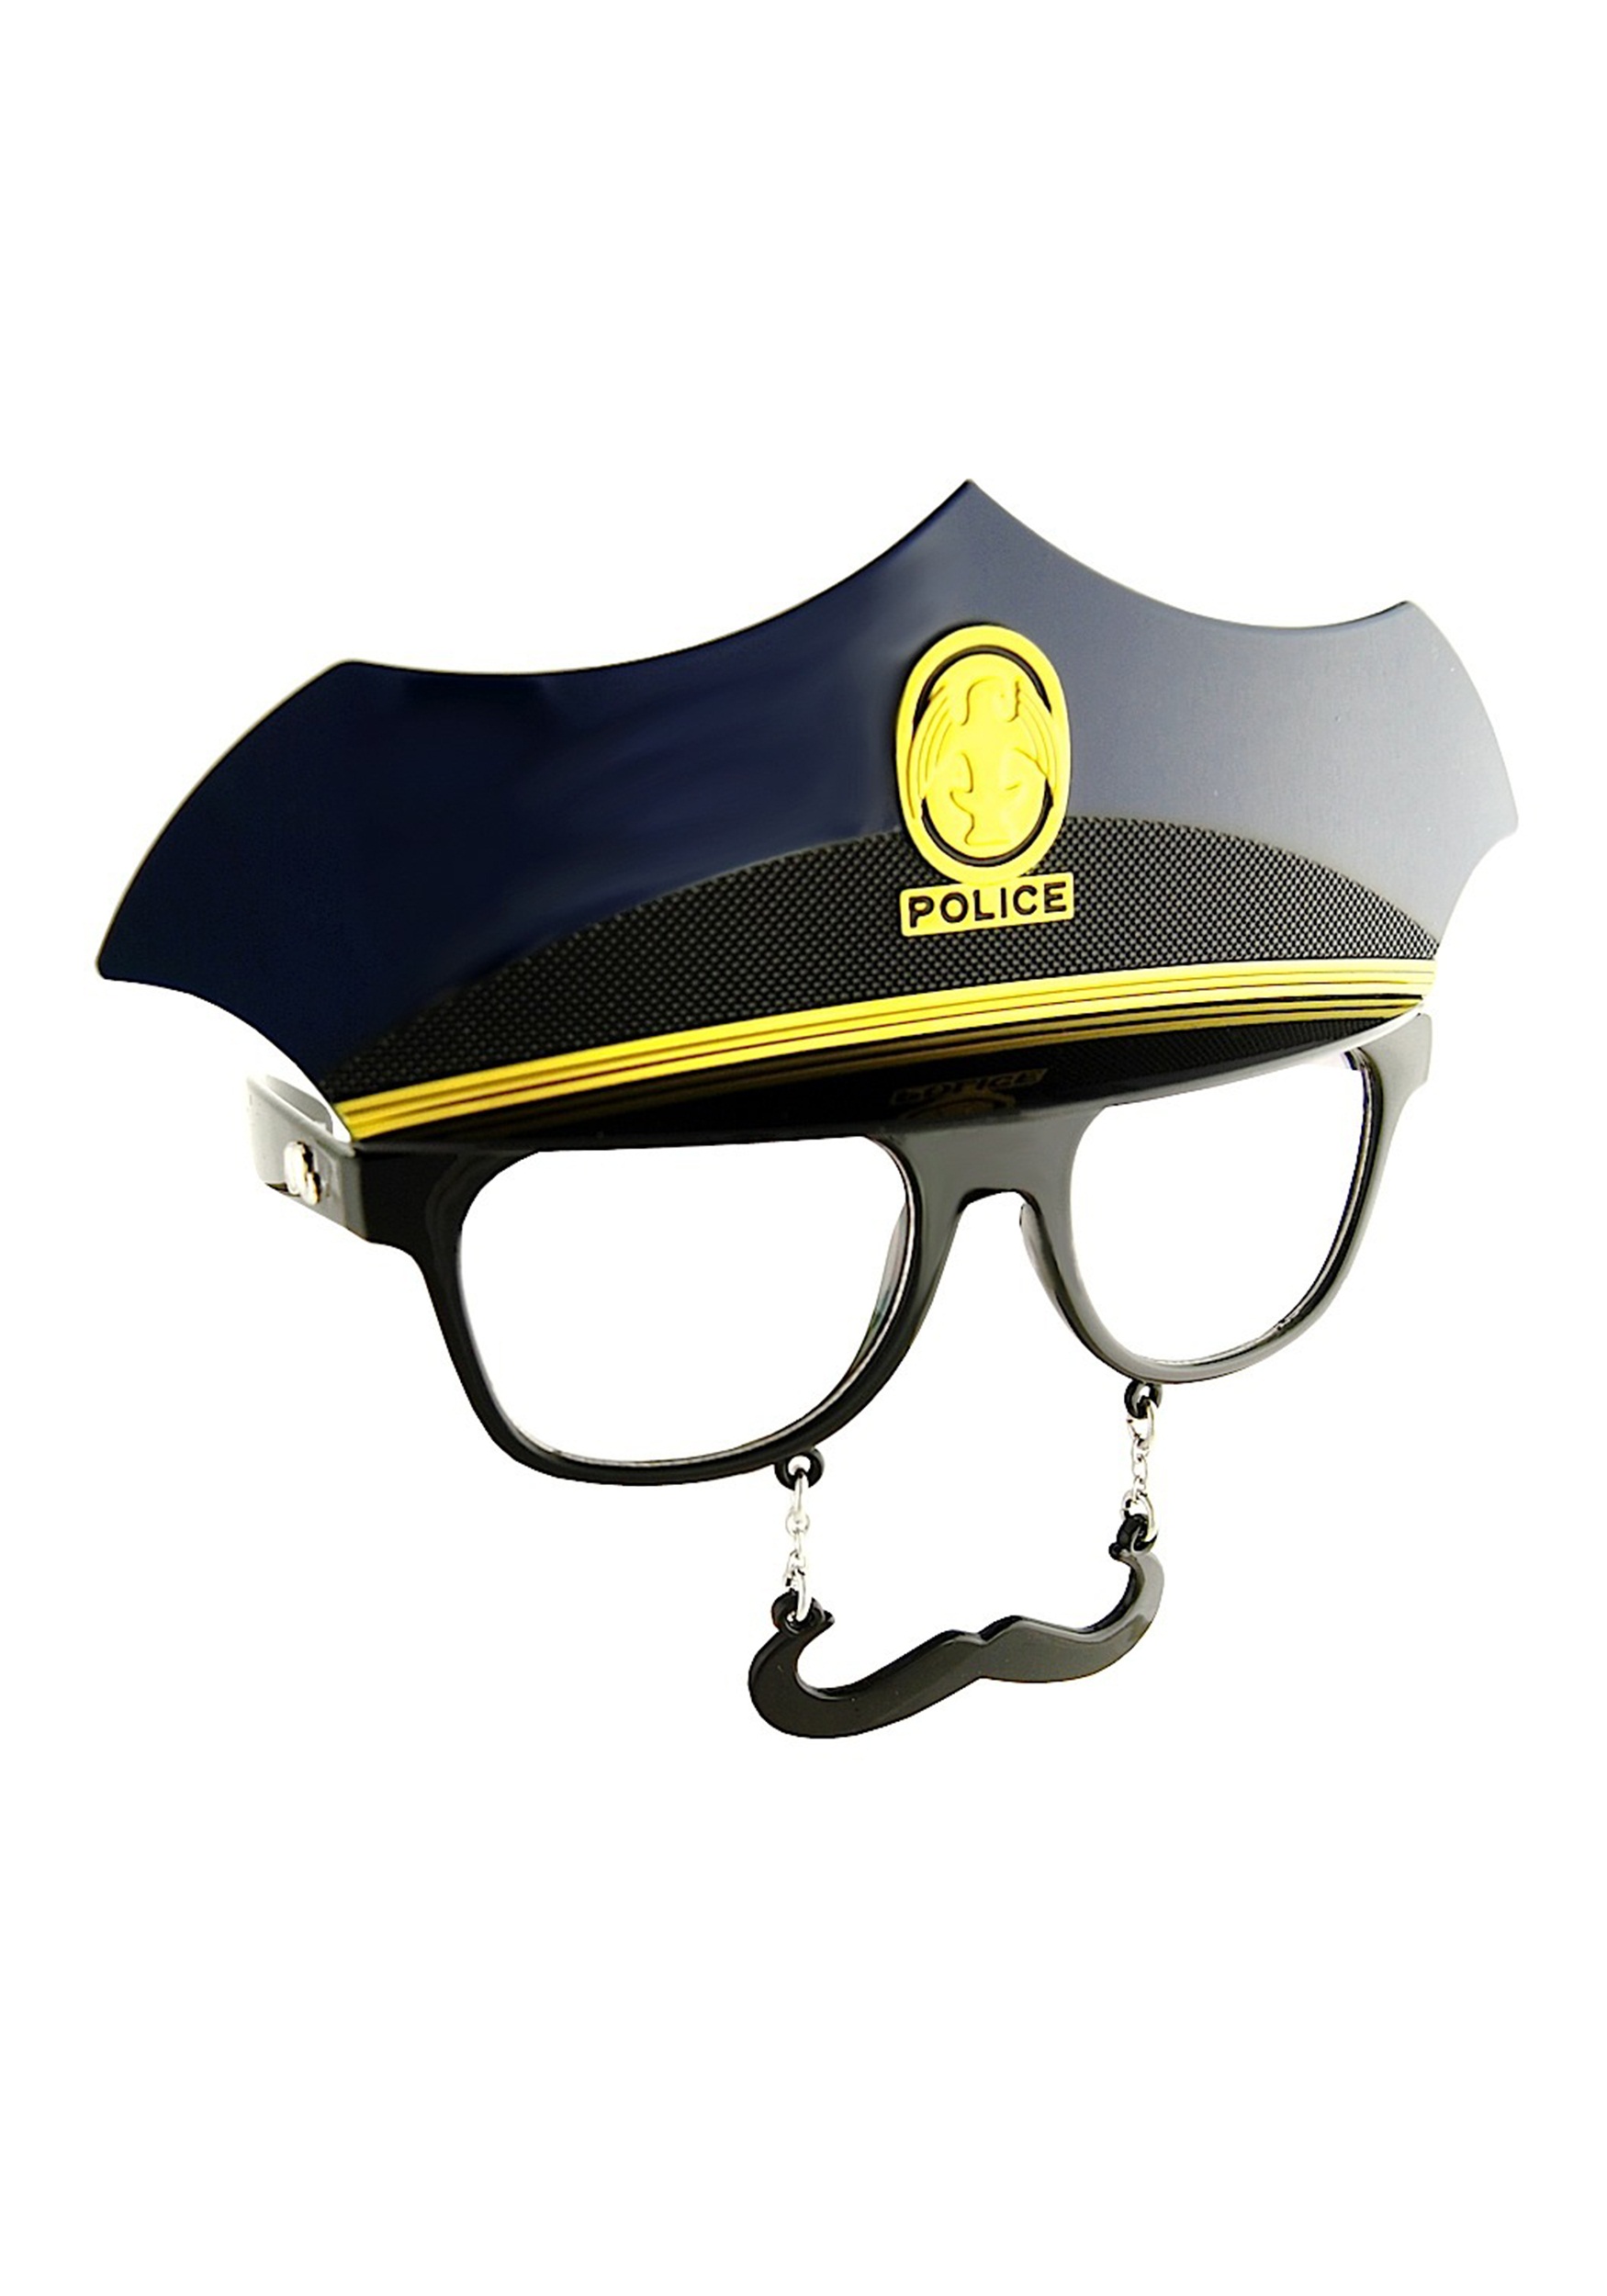 Police Mustache Glasses - Halloween Costume Ideas 2023